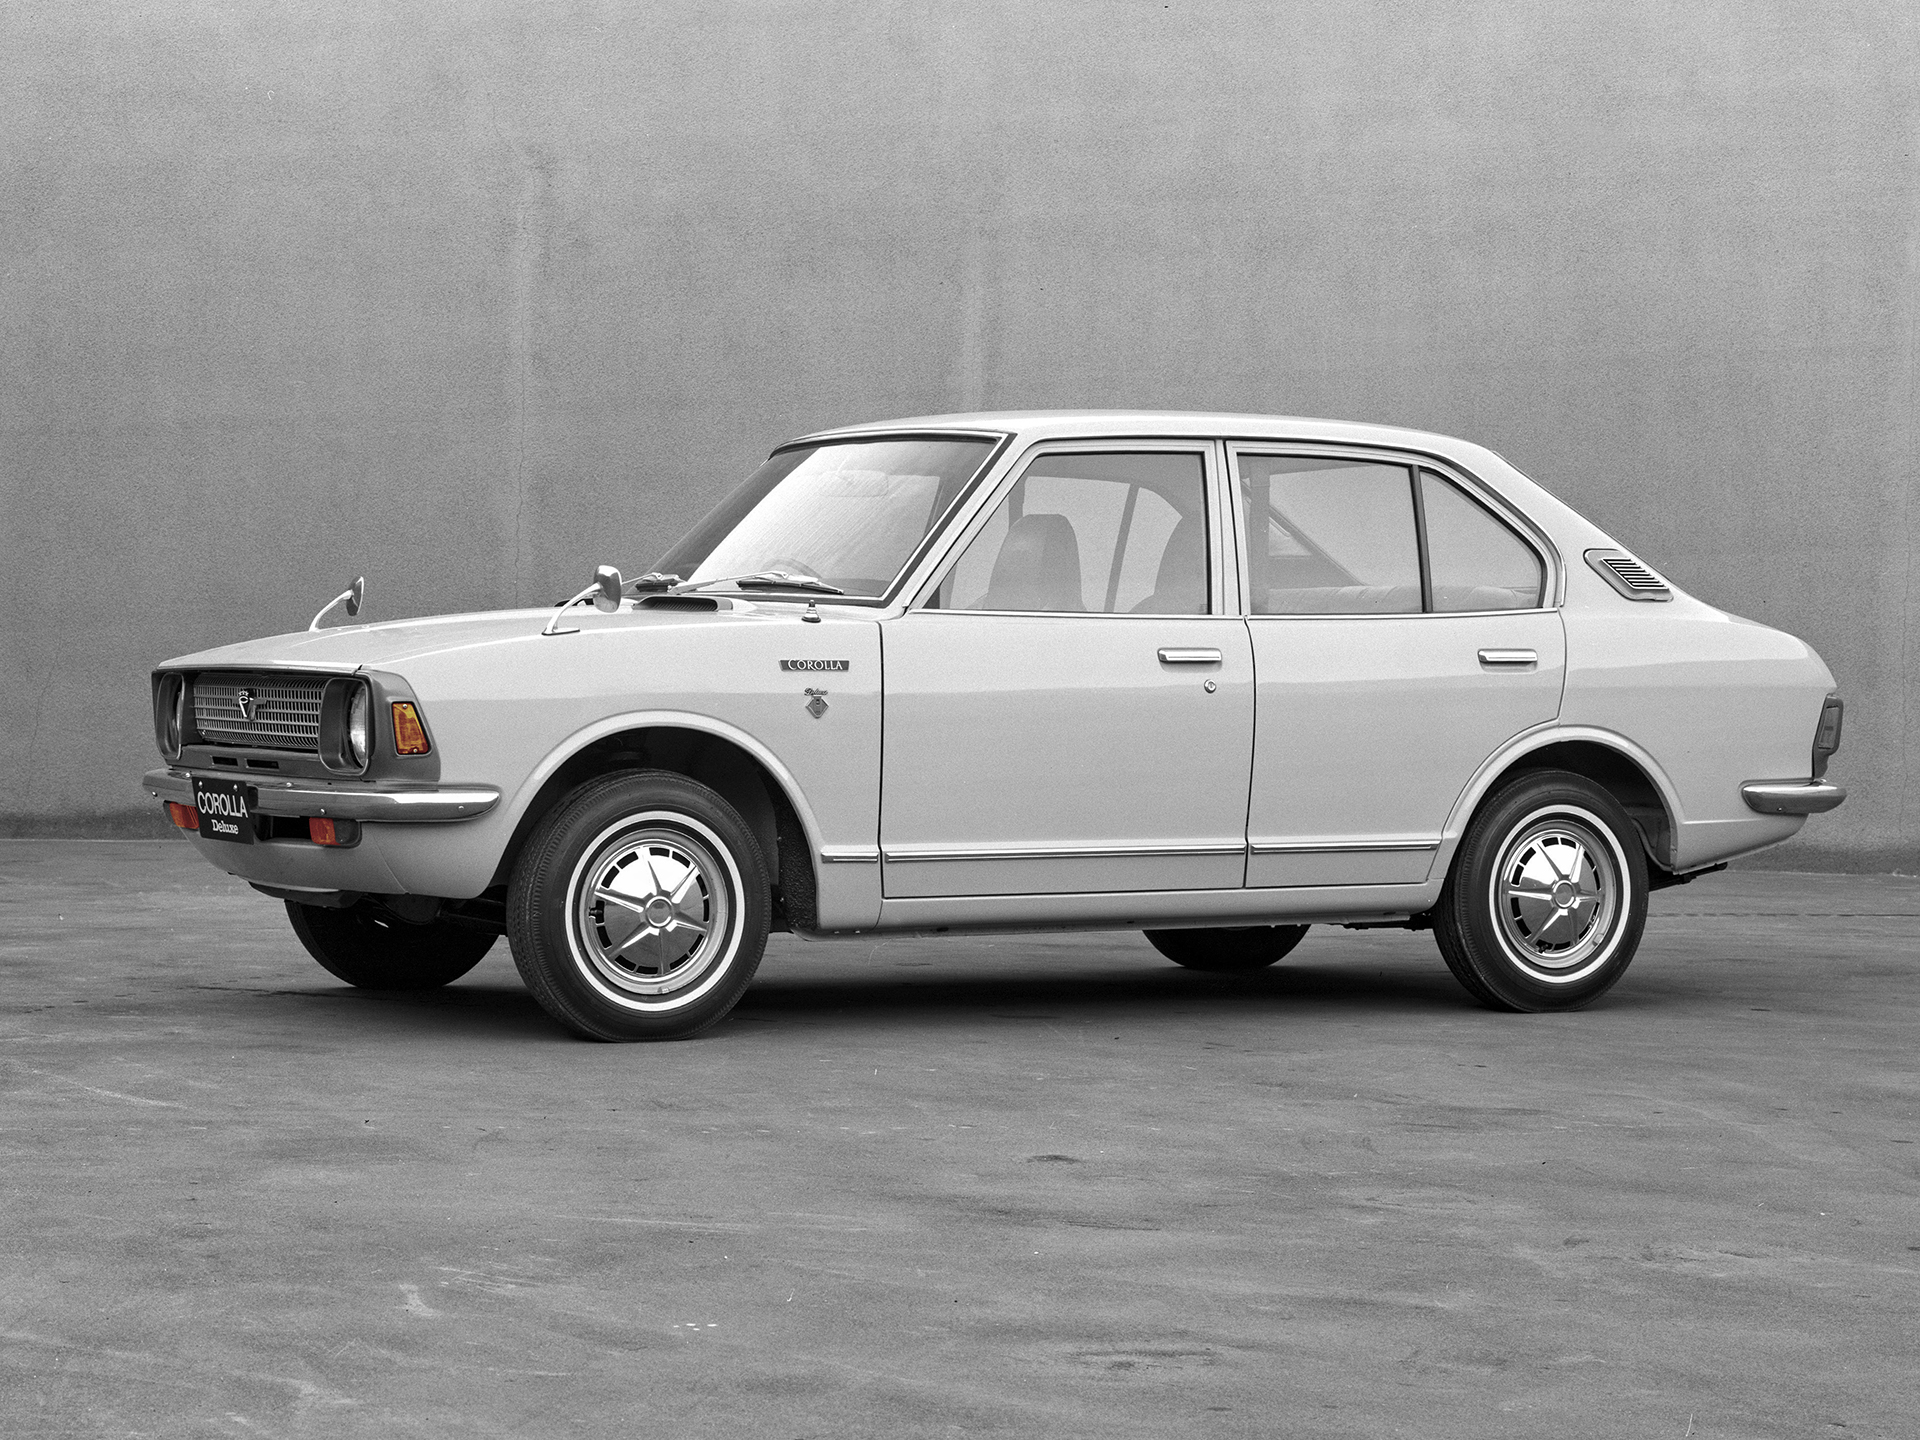 Europe - The 2nd Generation Corolla (1970 - 1974)